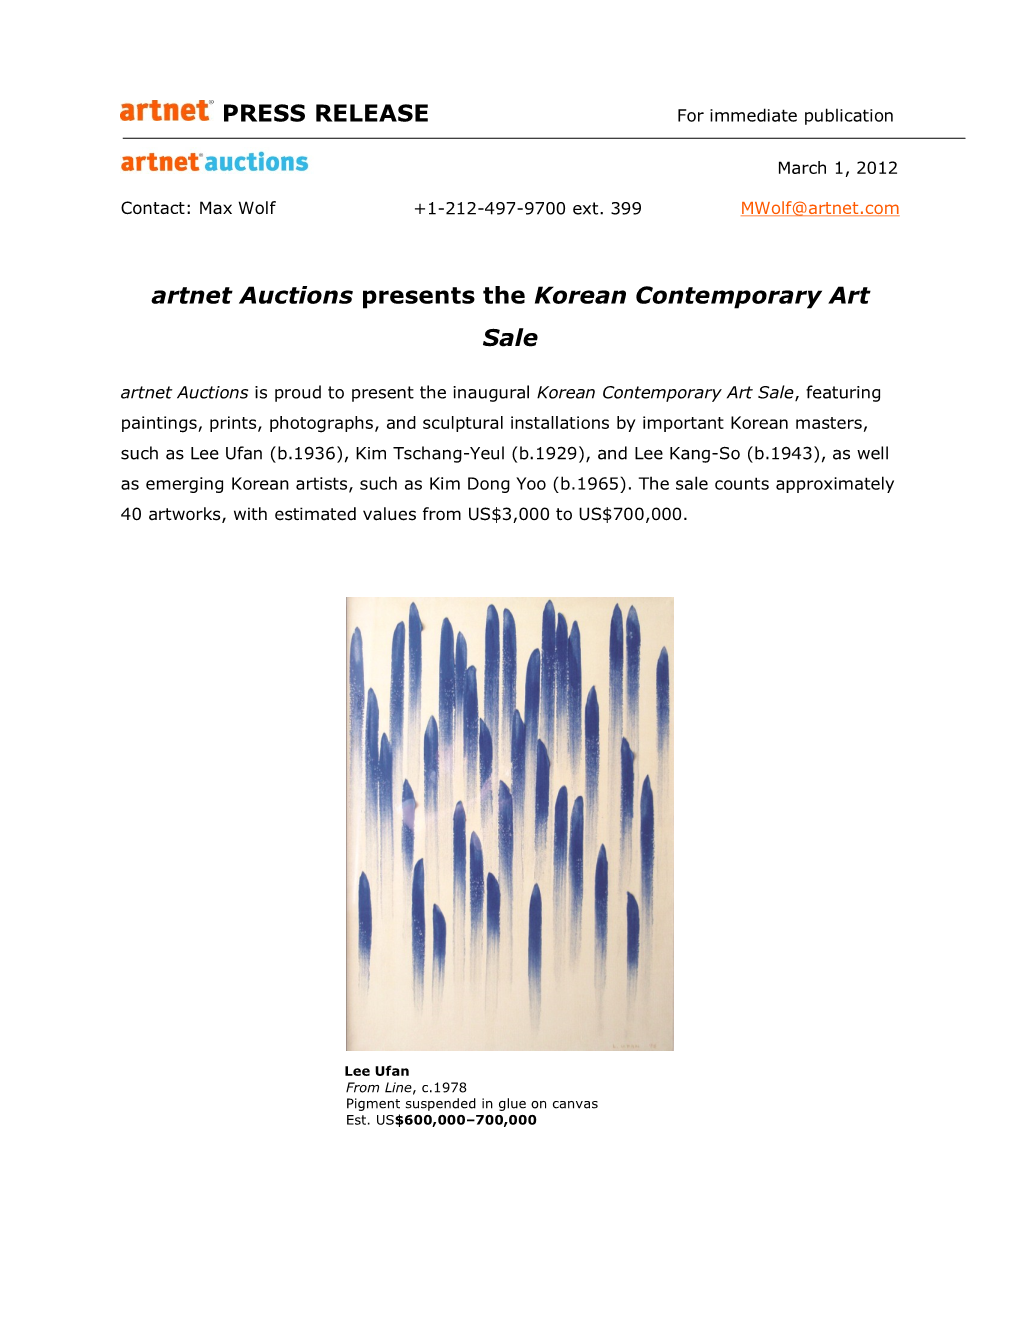 Korean Contemporary Art Sale